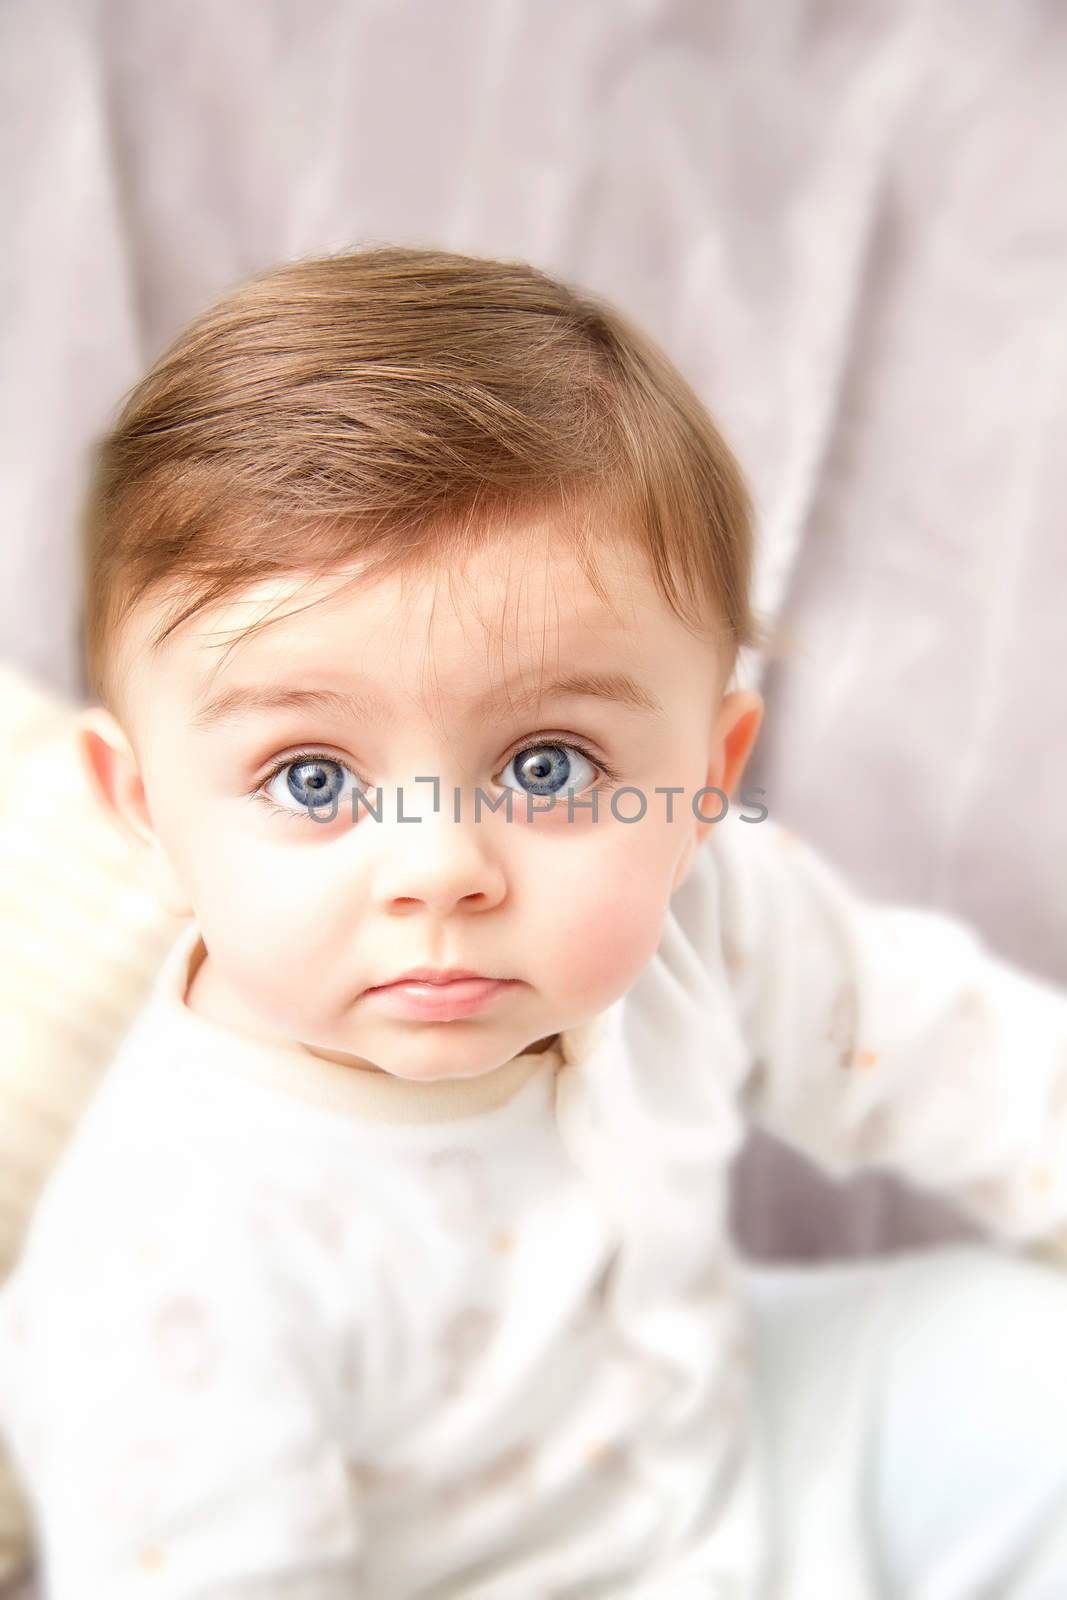 Cute baby by dynamicfoto